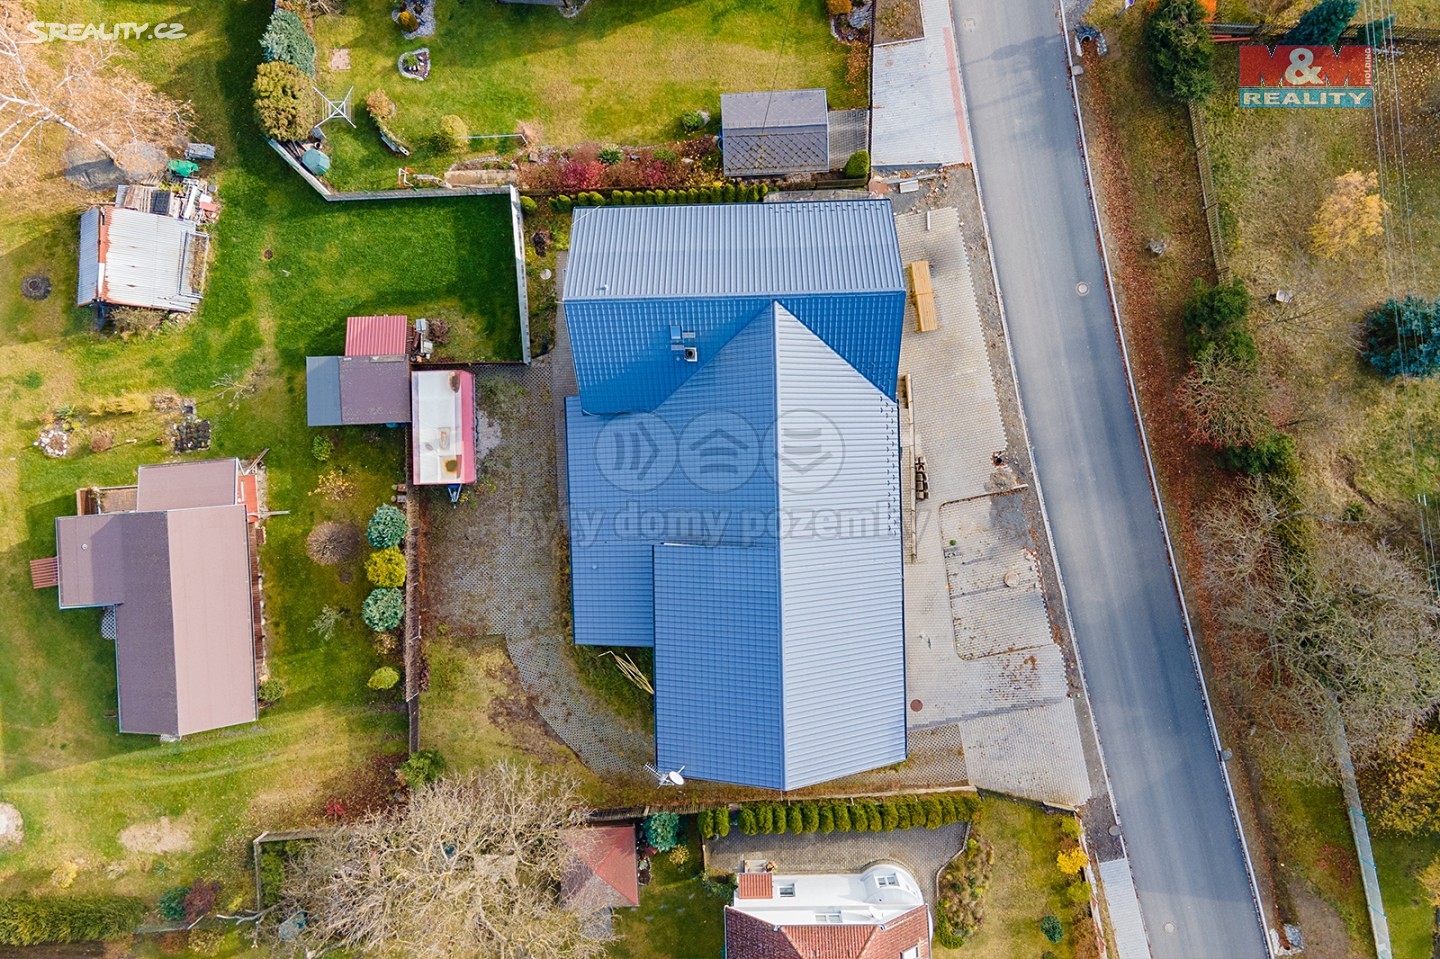 Prodej  rodinného domu 470 m², pozemek 470 m², Pernarec, okres Plzeň-sever